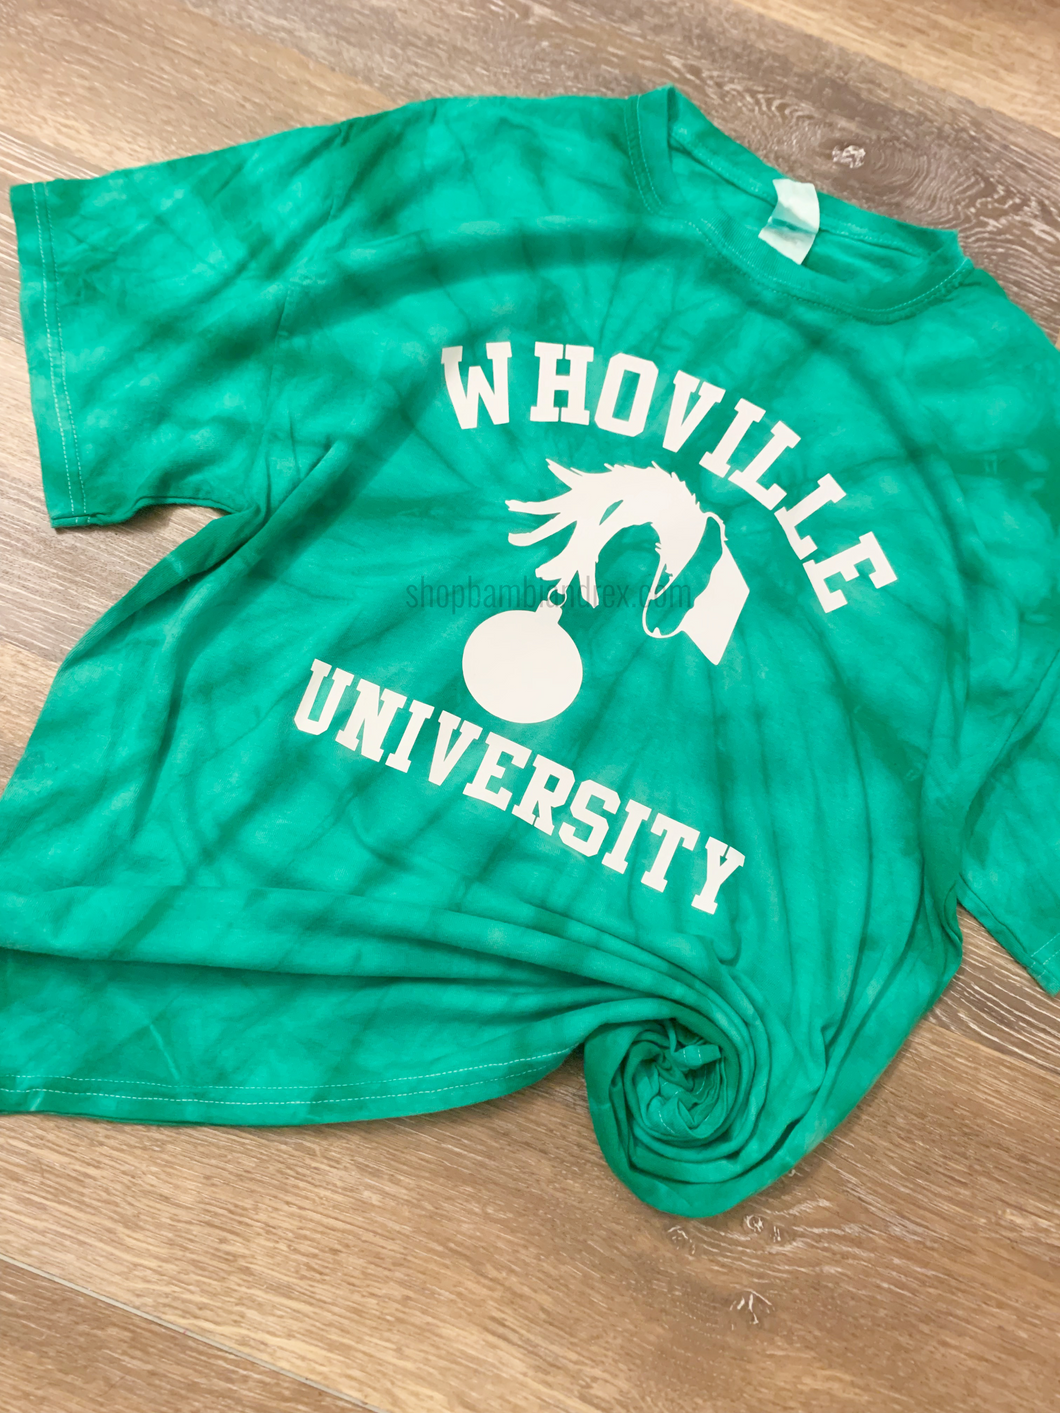 Whoville University Tie Dye T Shirt